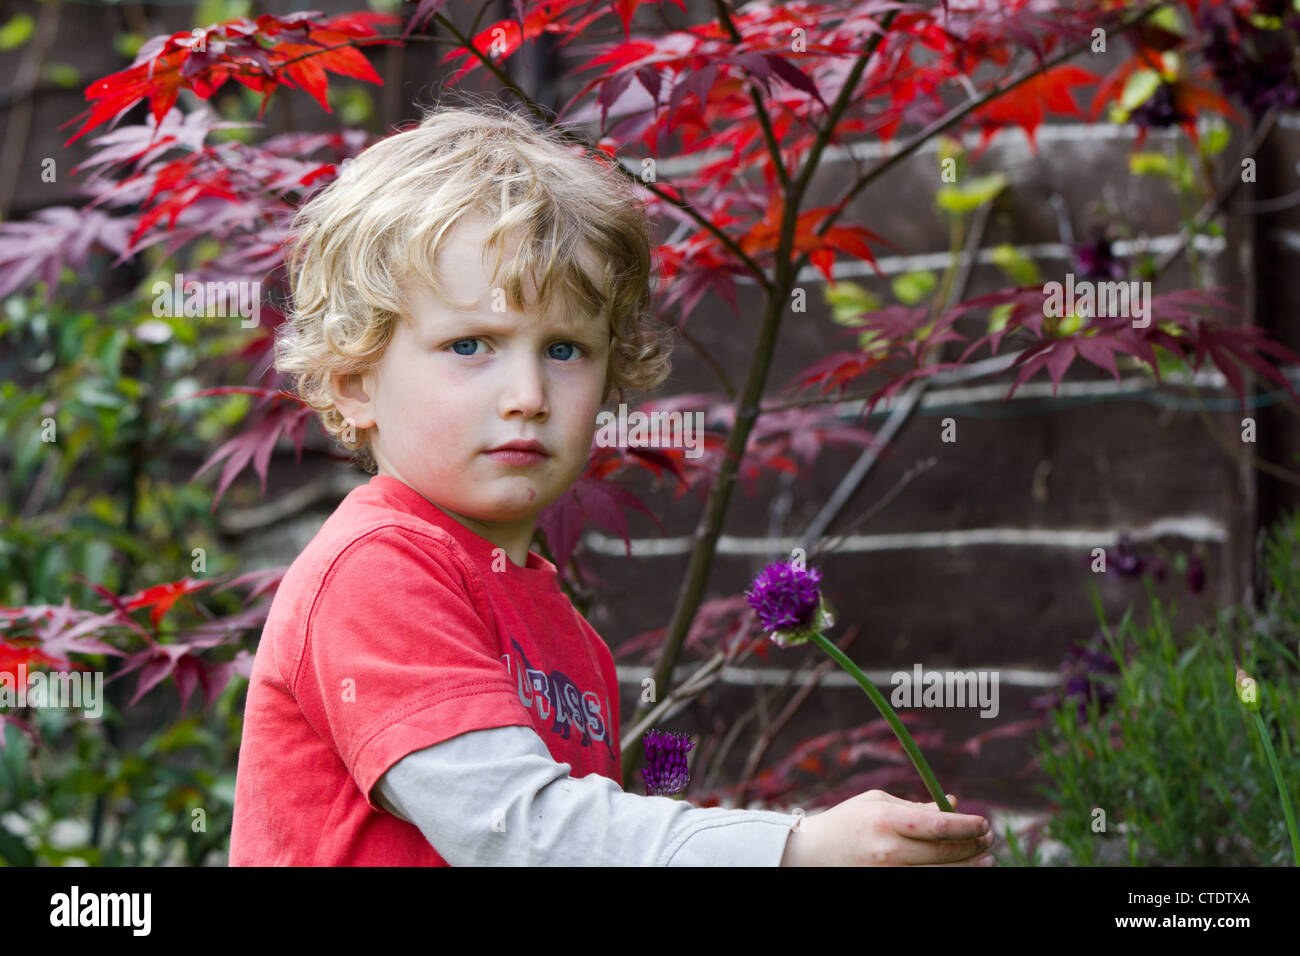 Young boy gardening Stock Photo